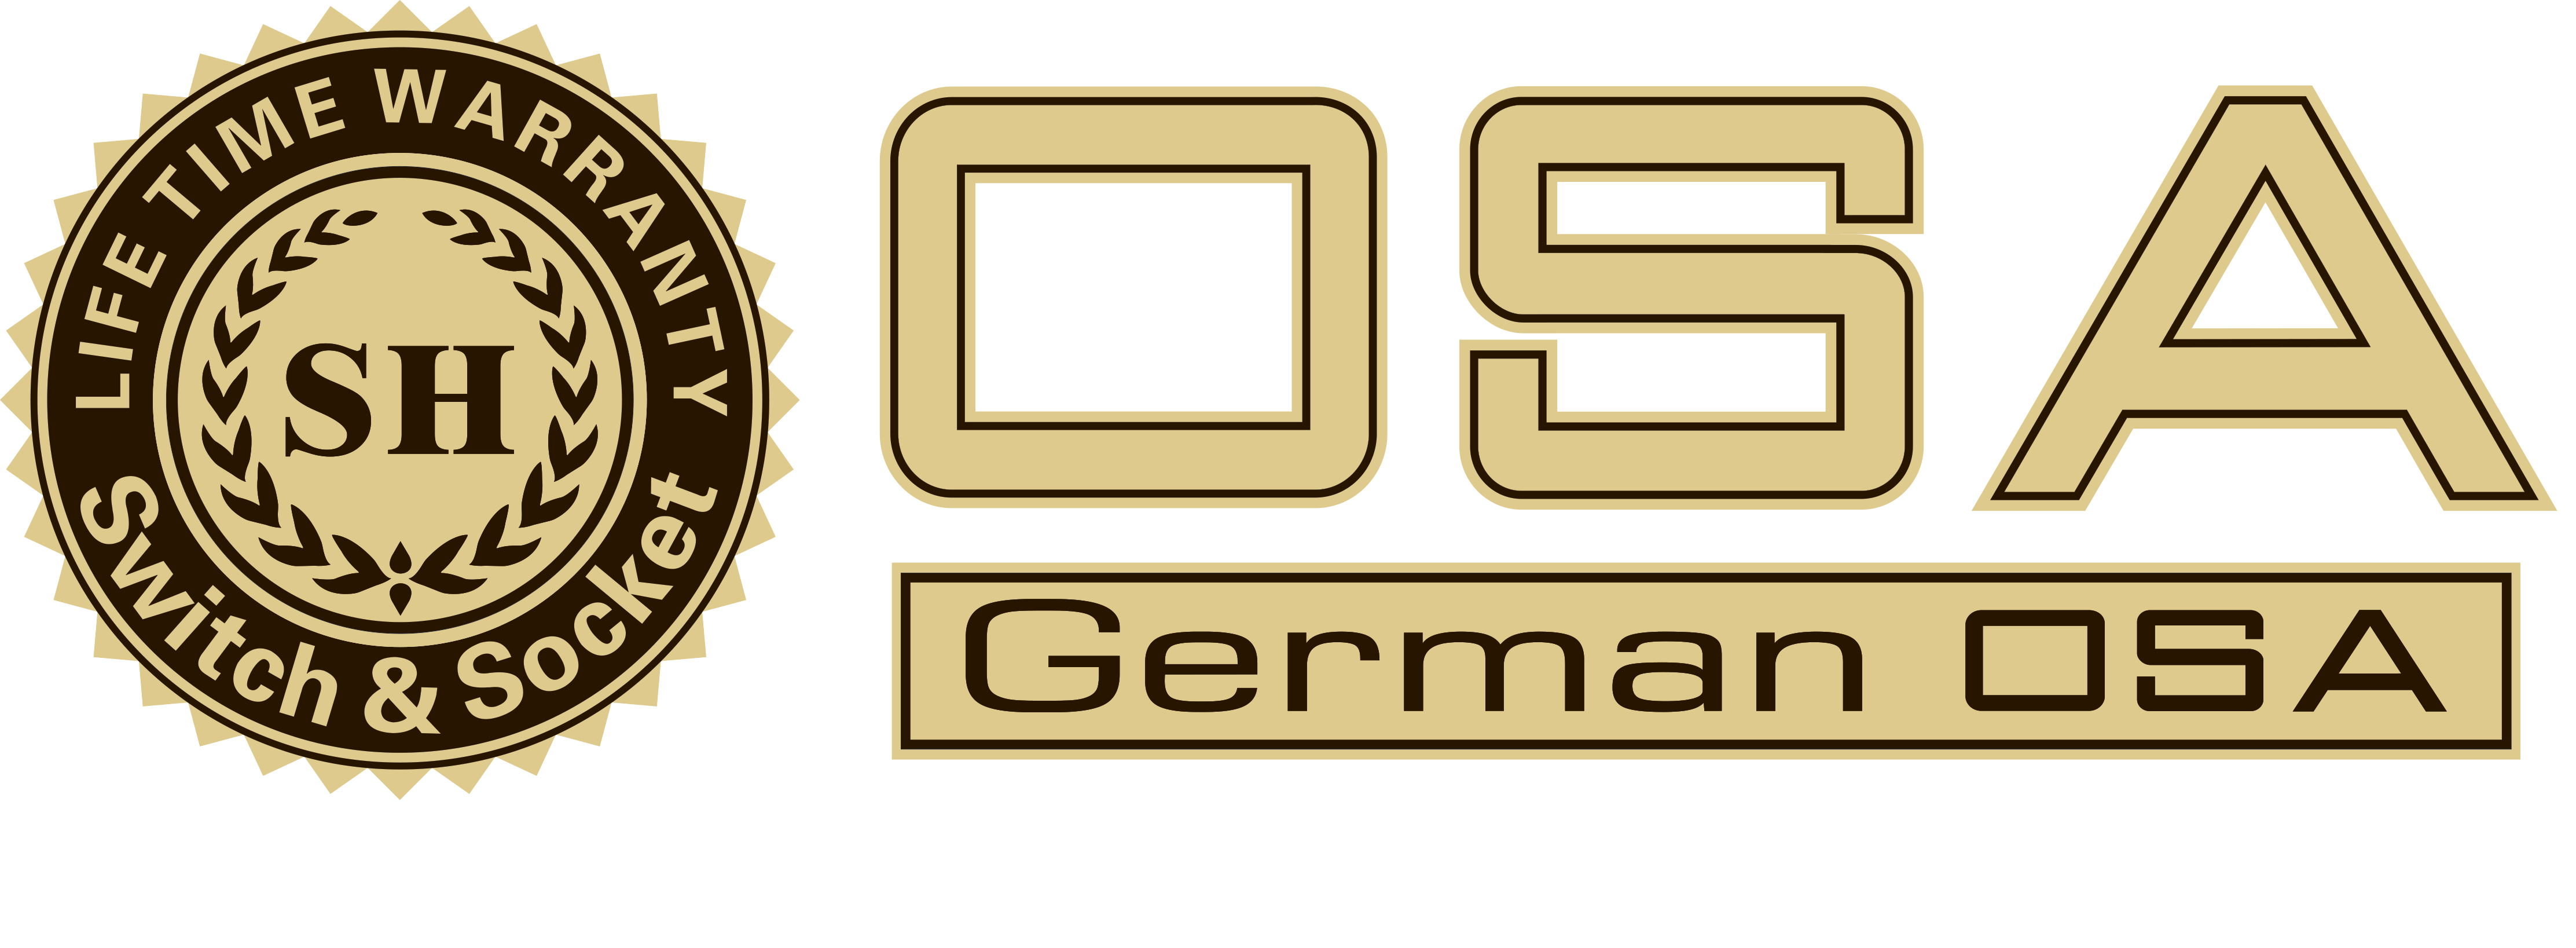 OSA-Logo